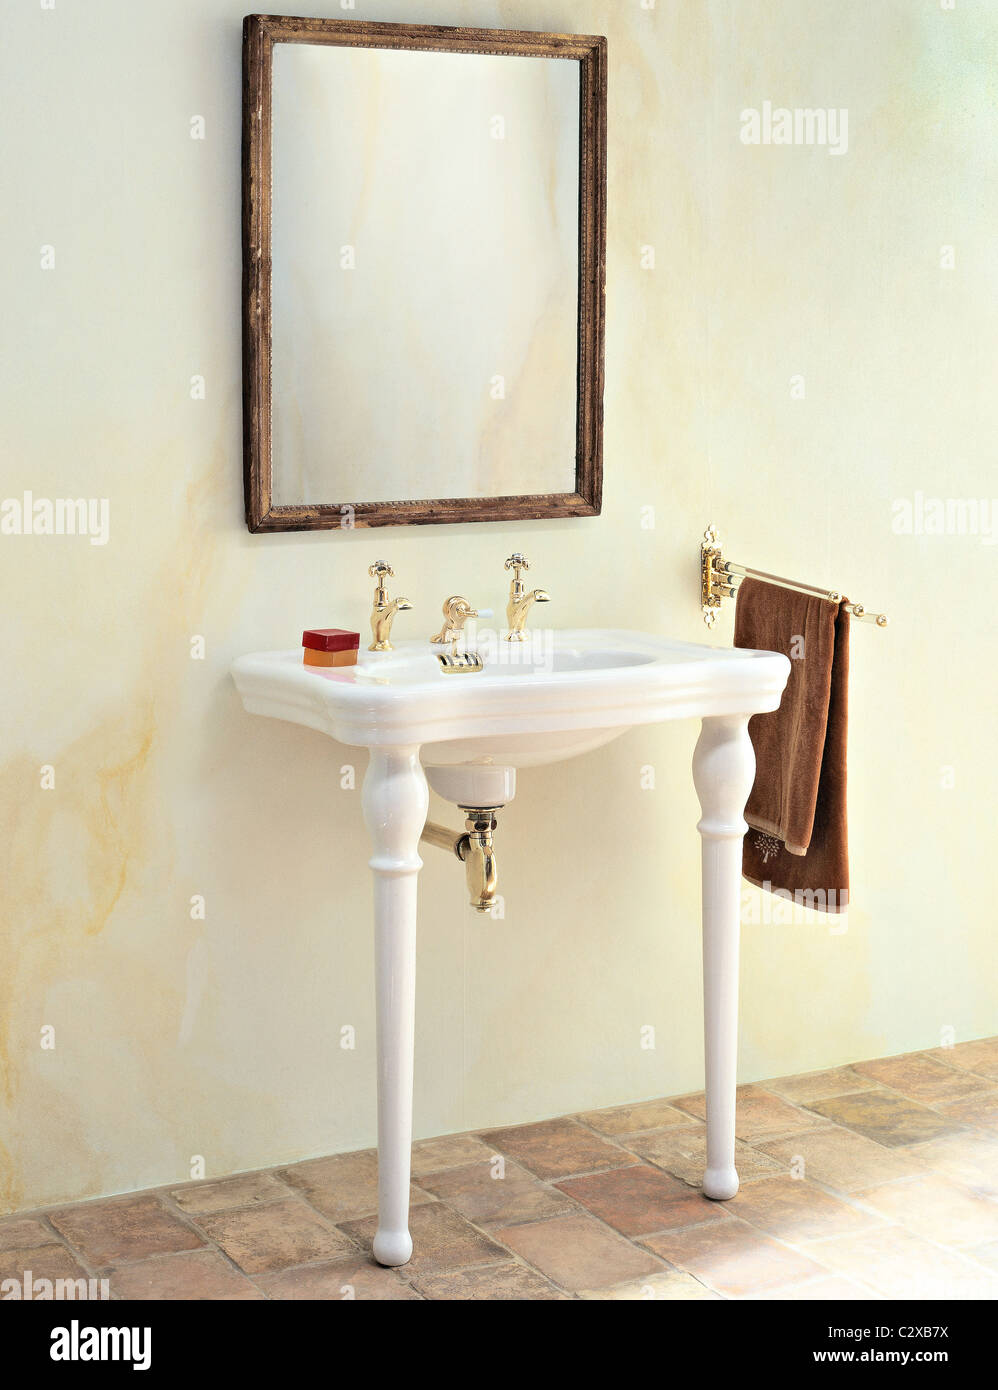 Bathroom Wash Basin Mirror Stock Photo Alamy